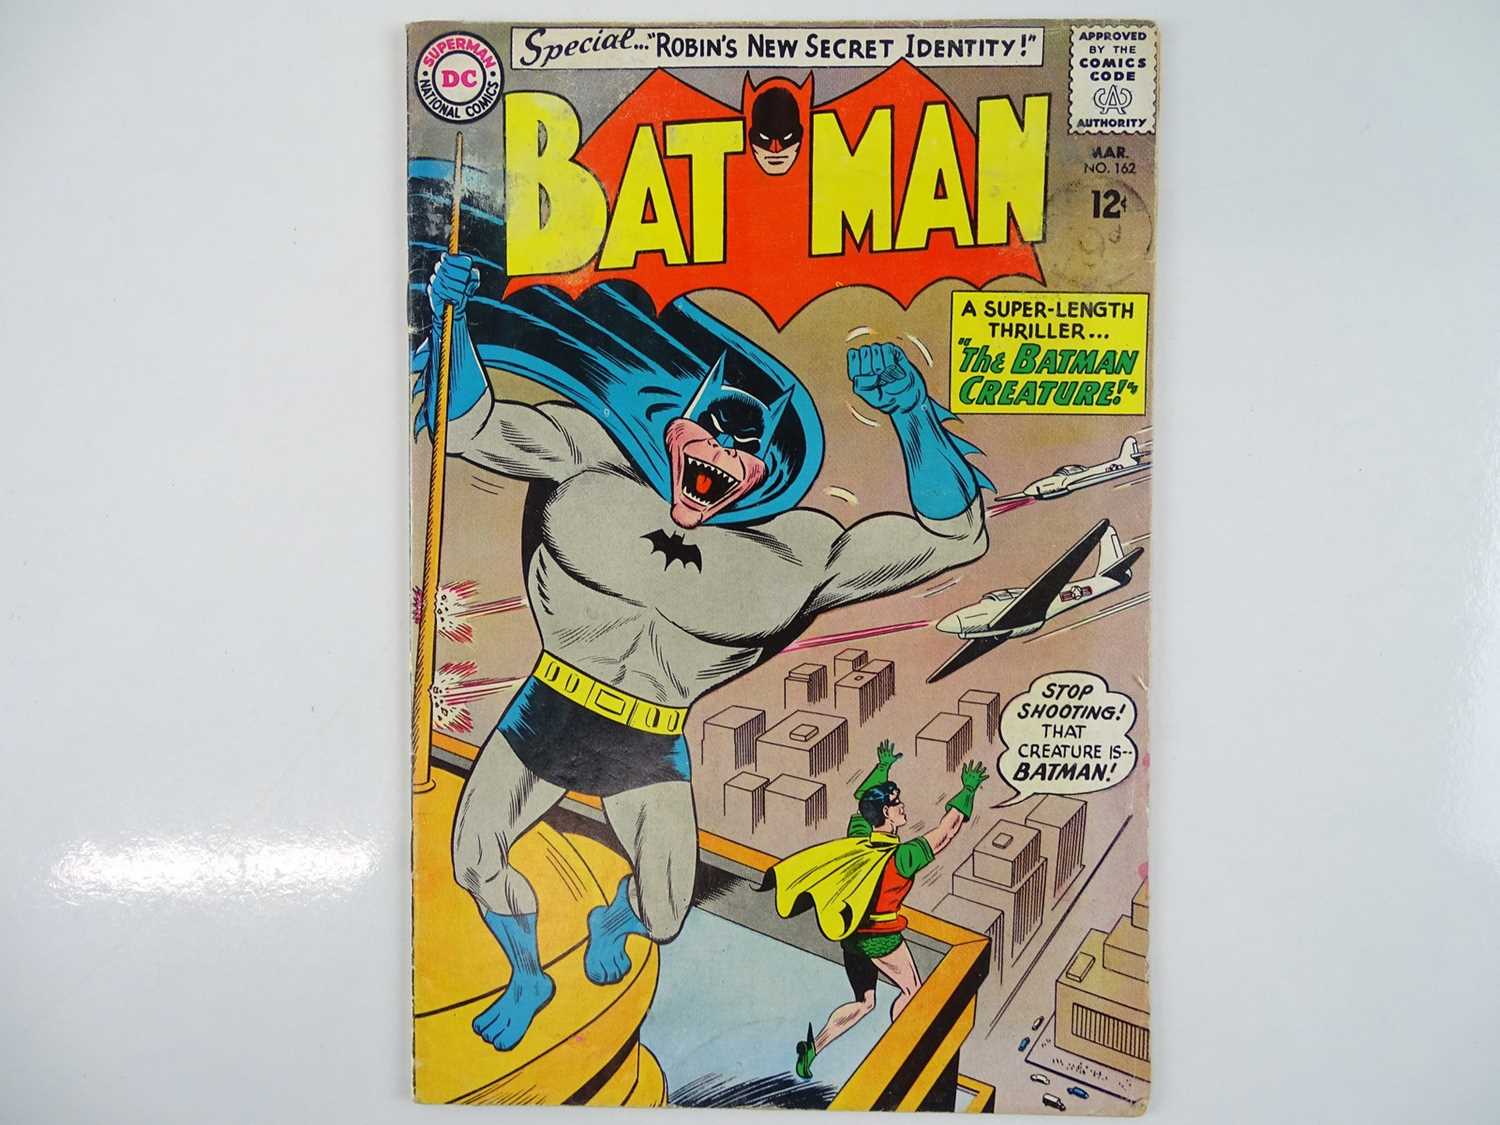 Lot 297 - BATMAN #162 - (1964 - DC - UK Cover Price) -